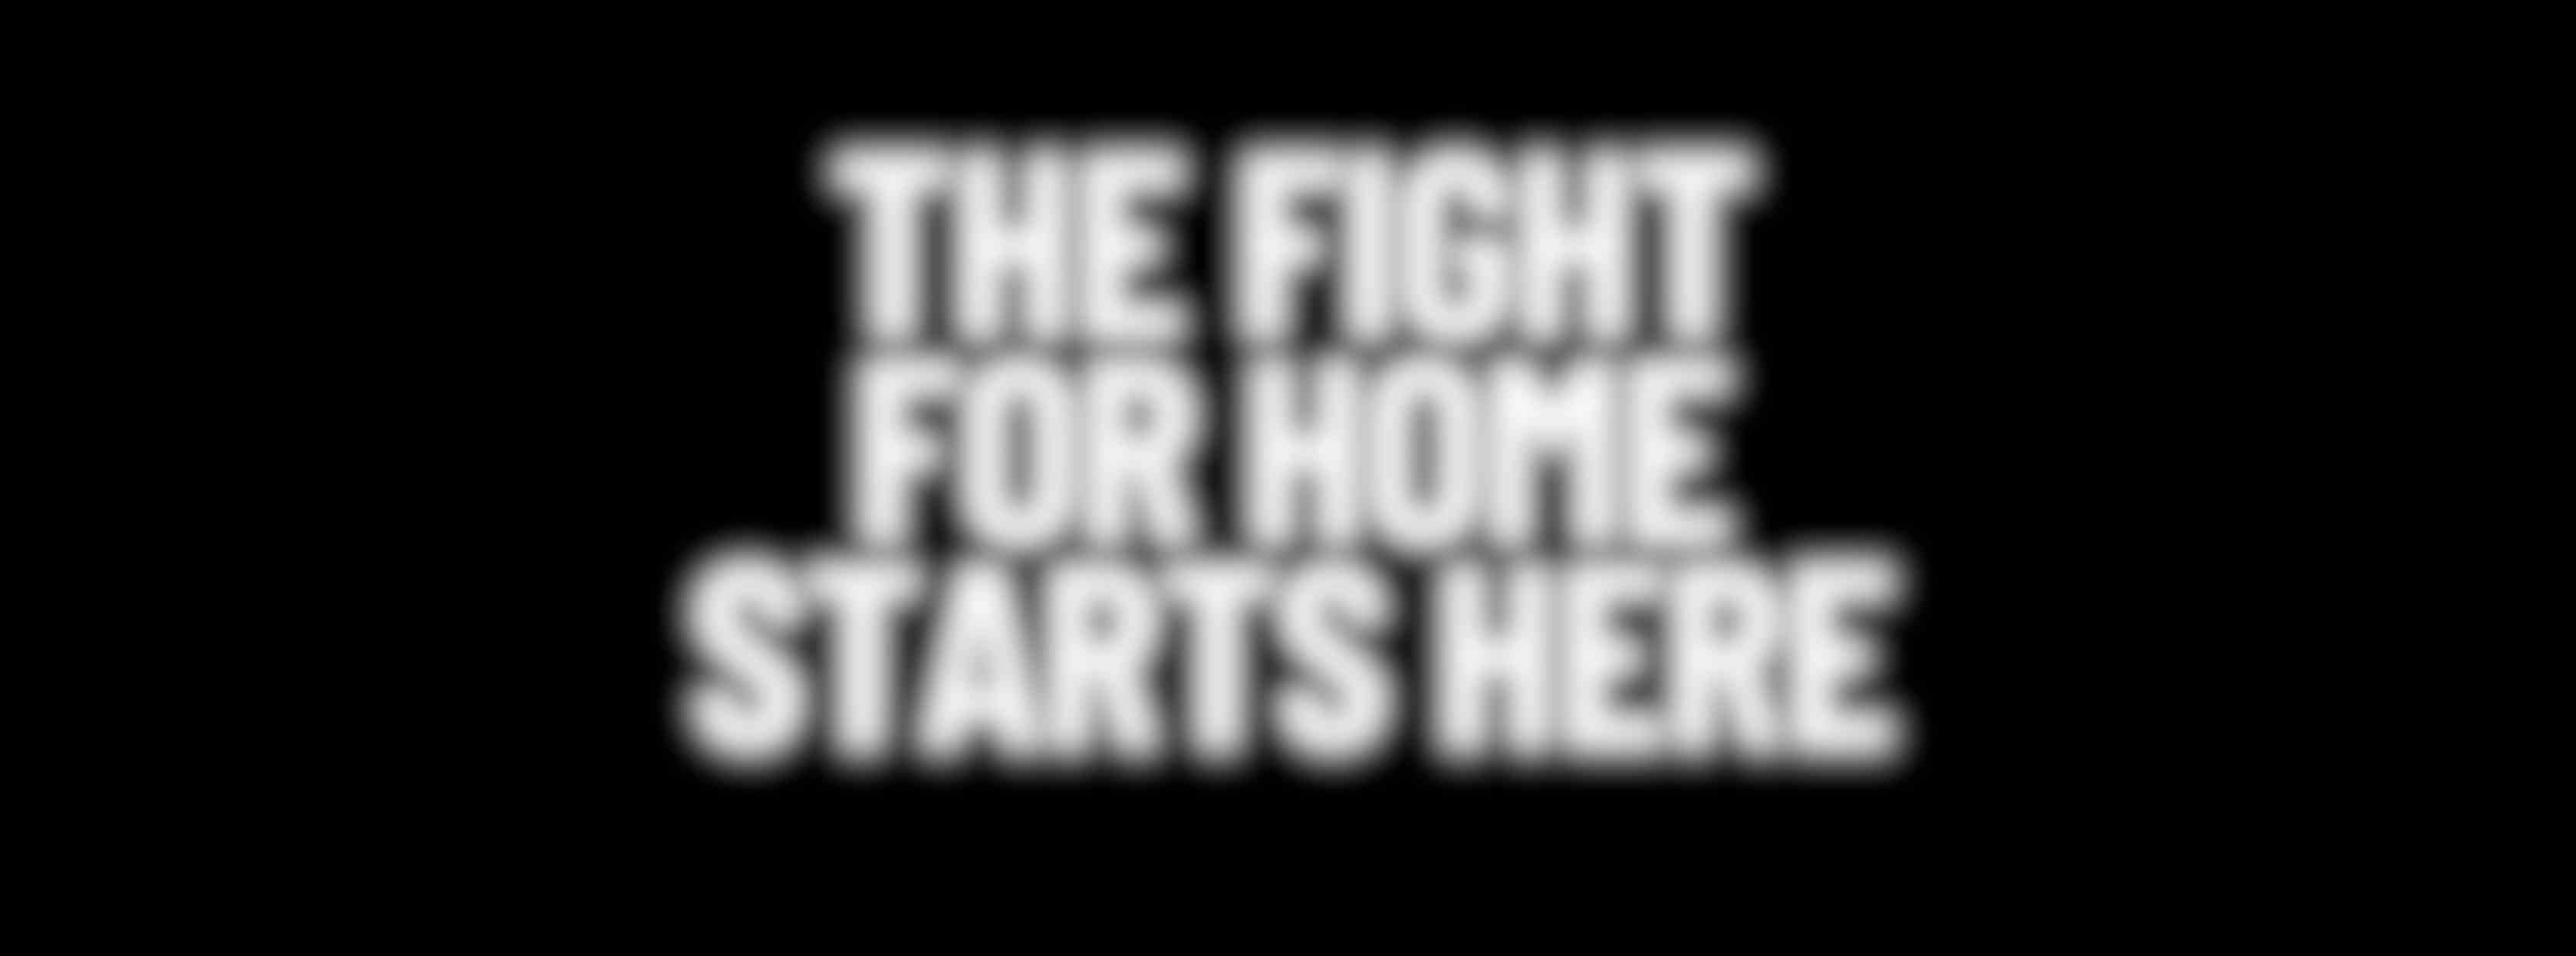 ‘Fight For Home’ Group Member - Norfolk